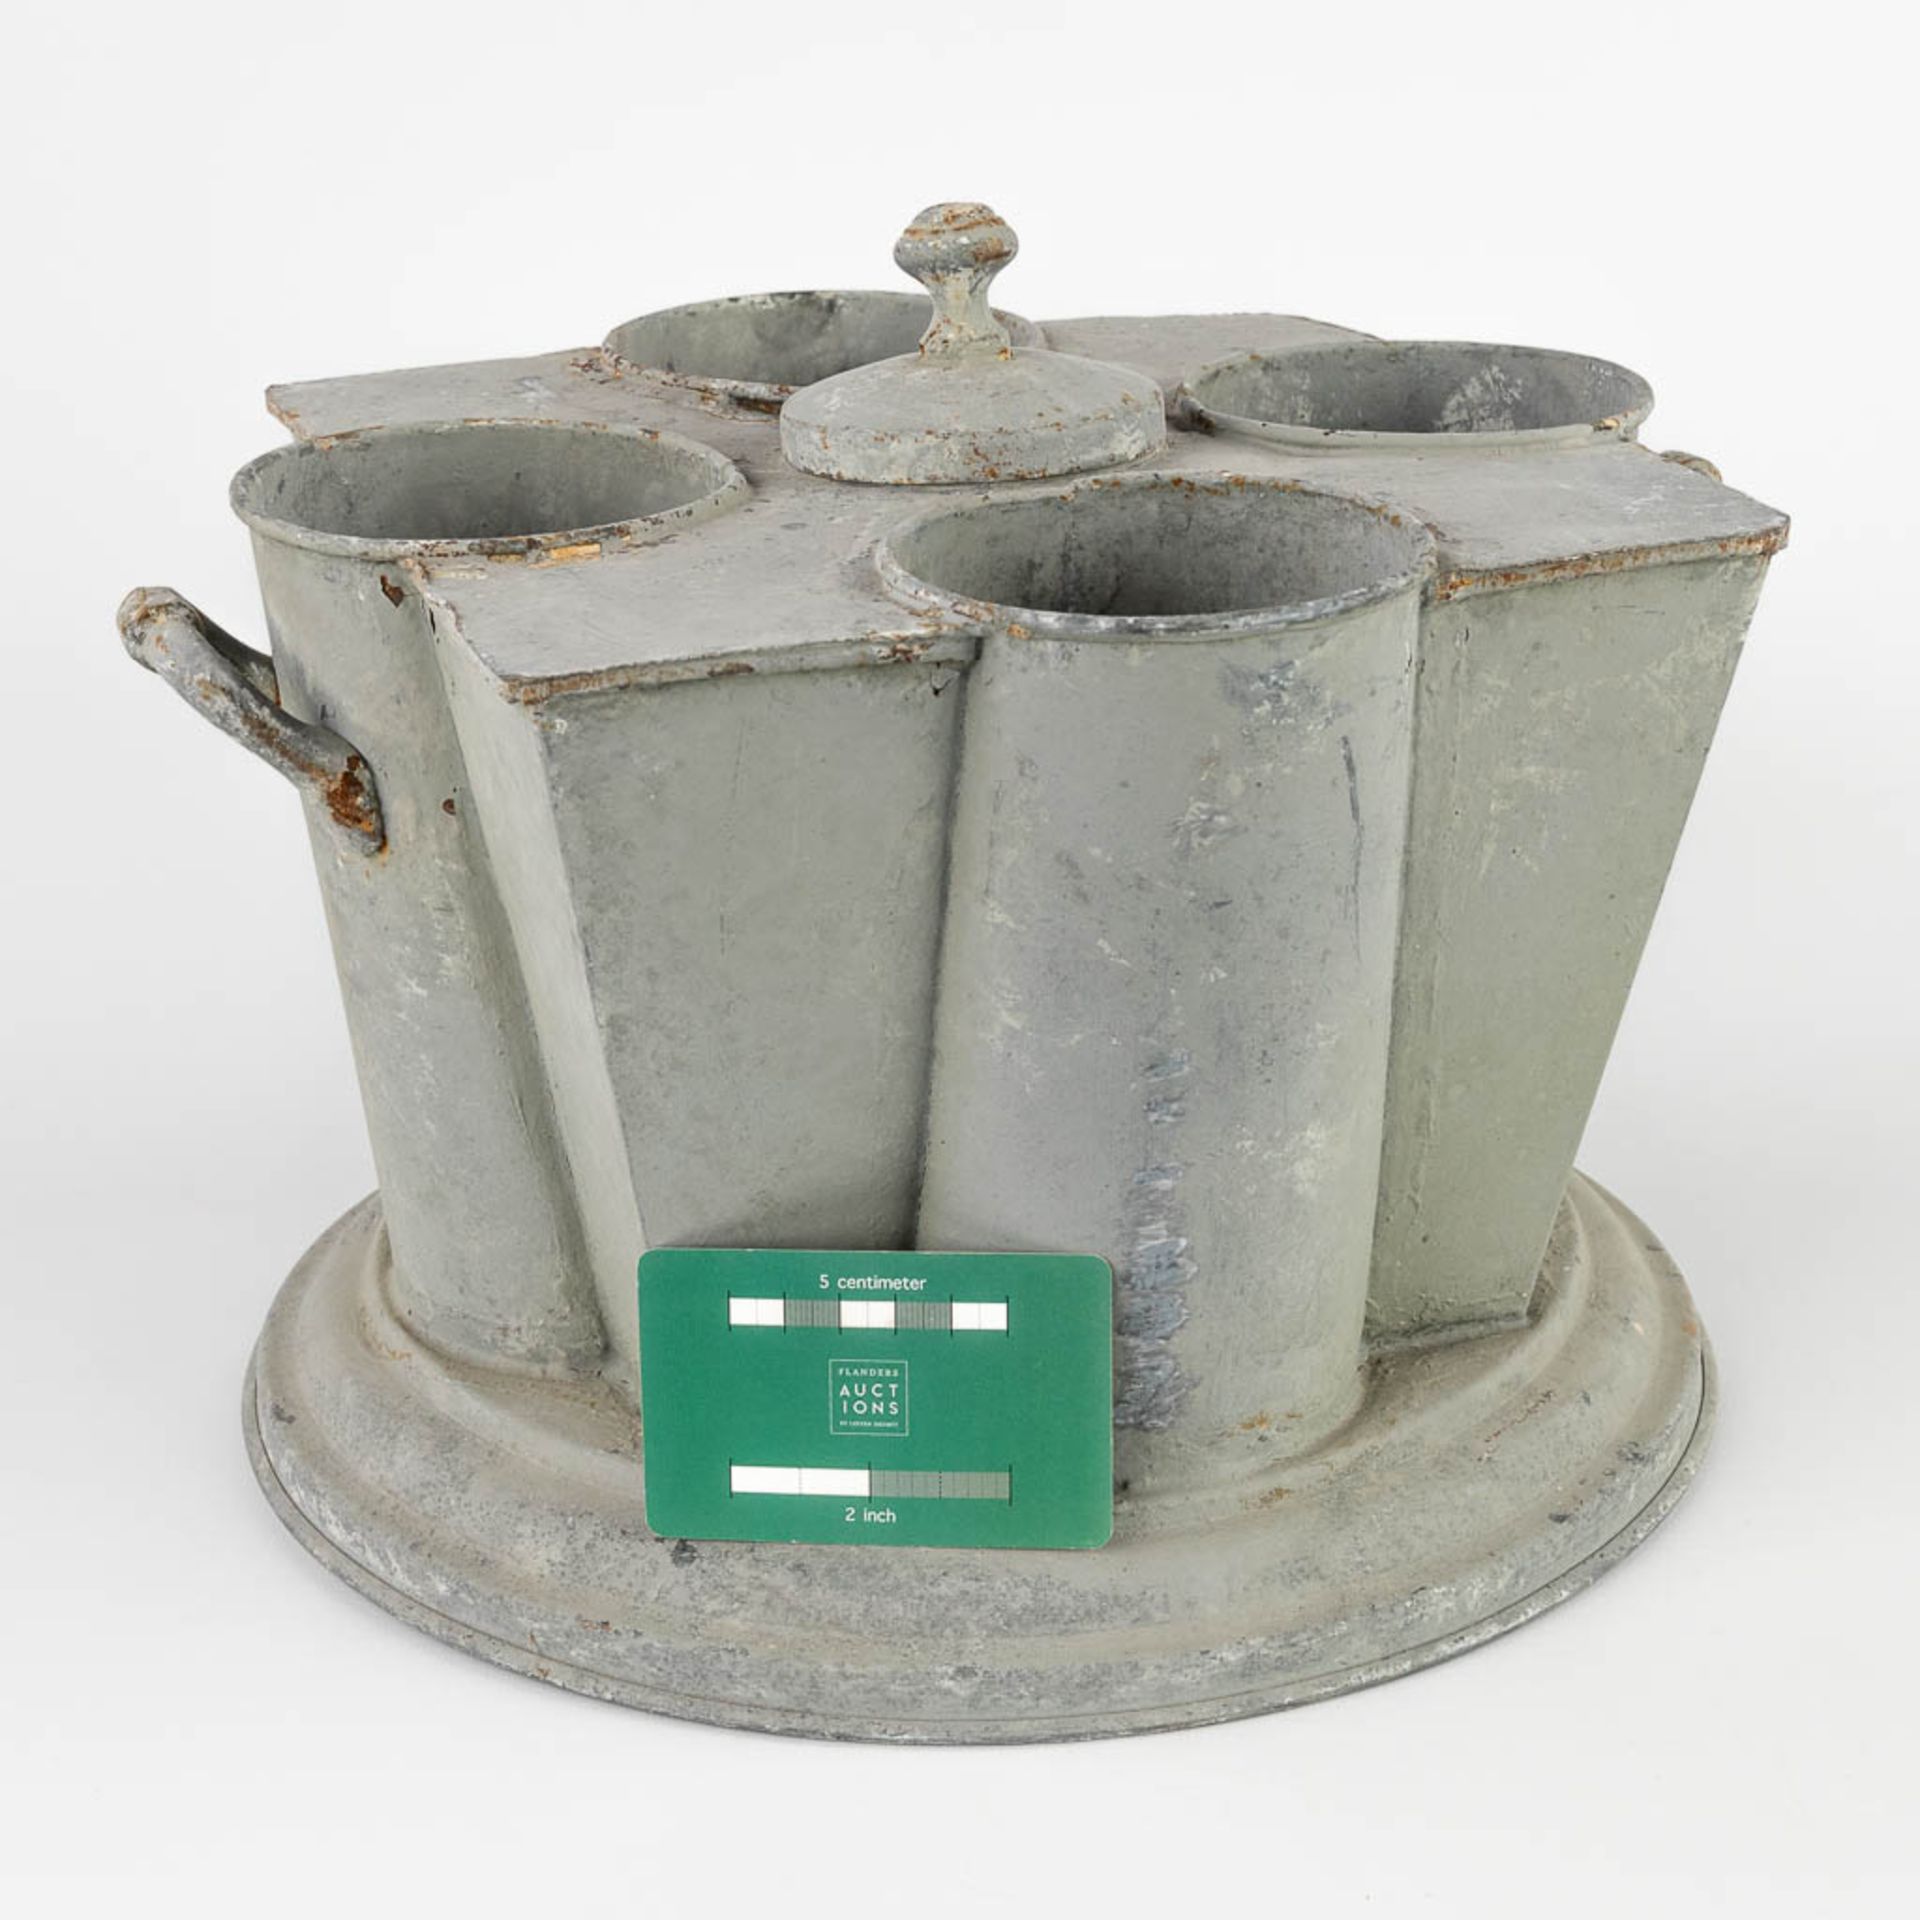 An antique wine cooler, made of zinc. (W:33 x H:25 x D:31 cm) - Image 2 of 13